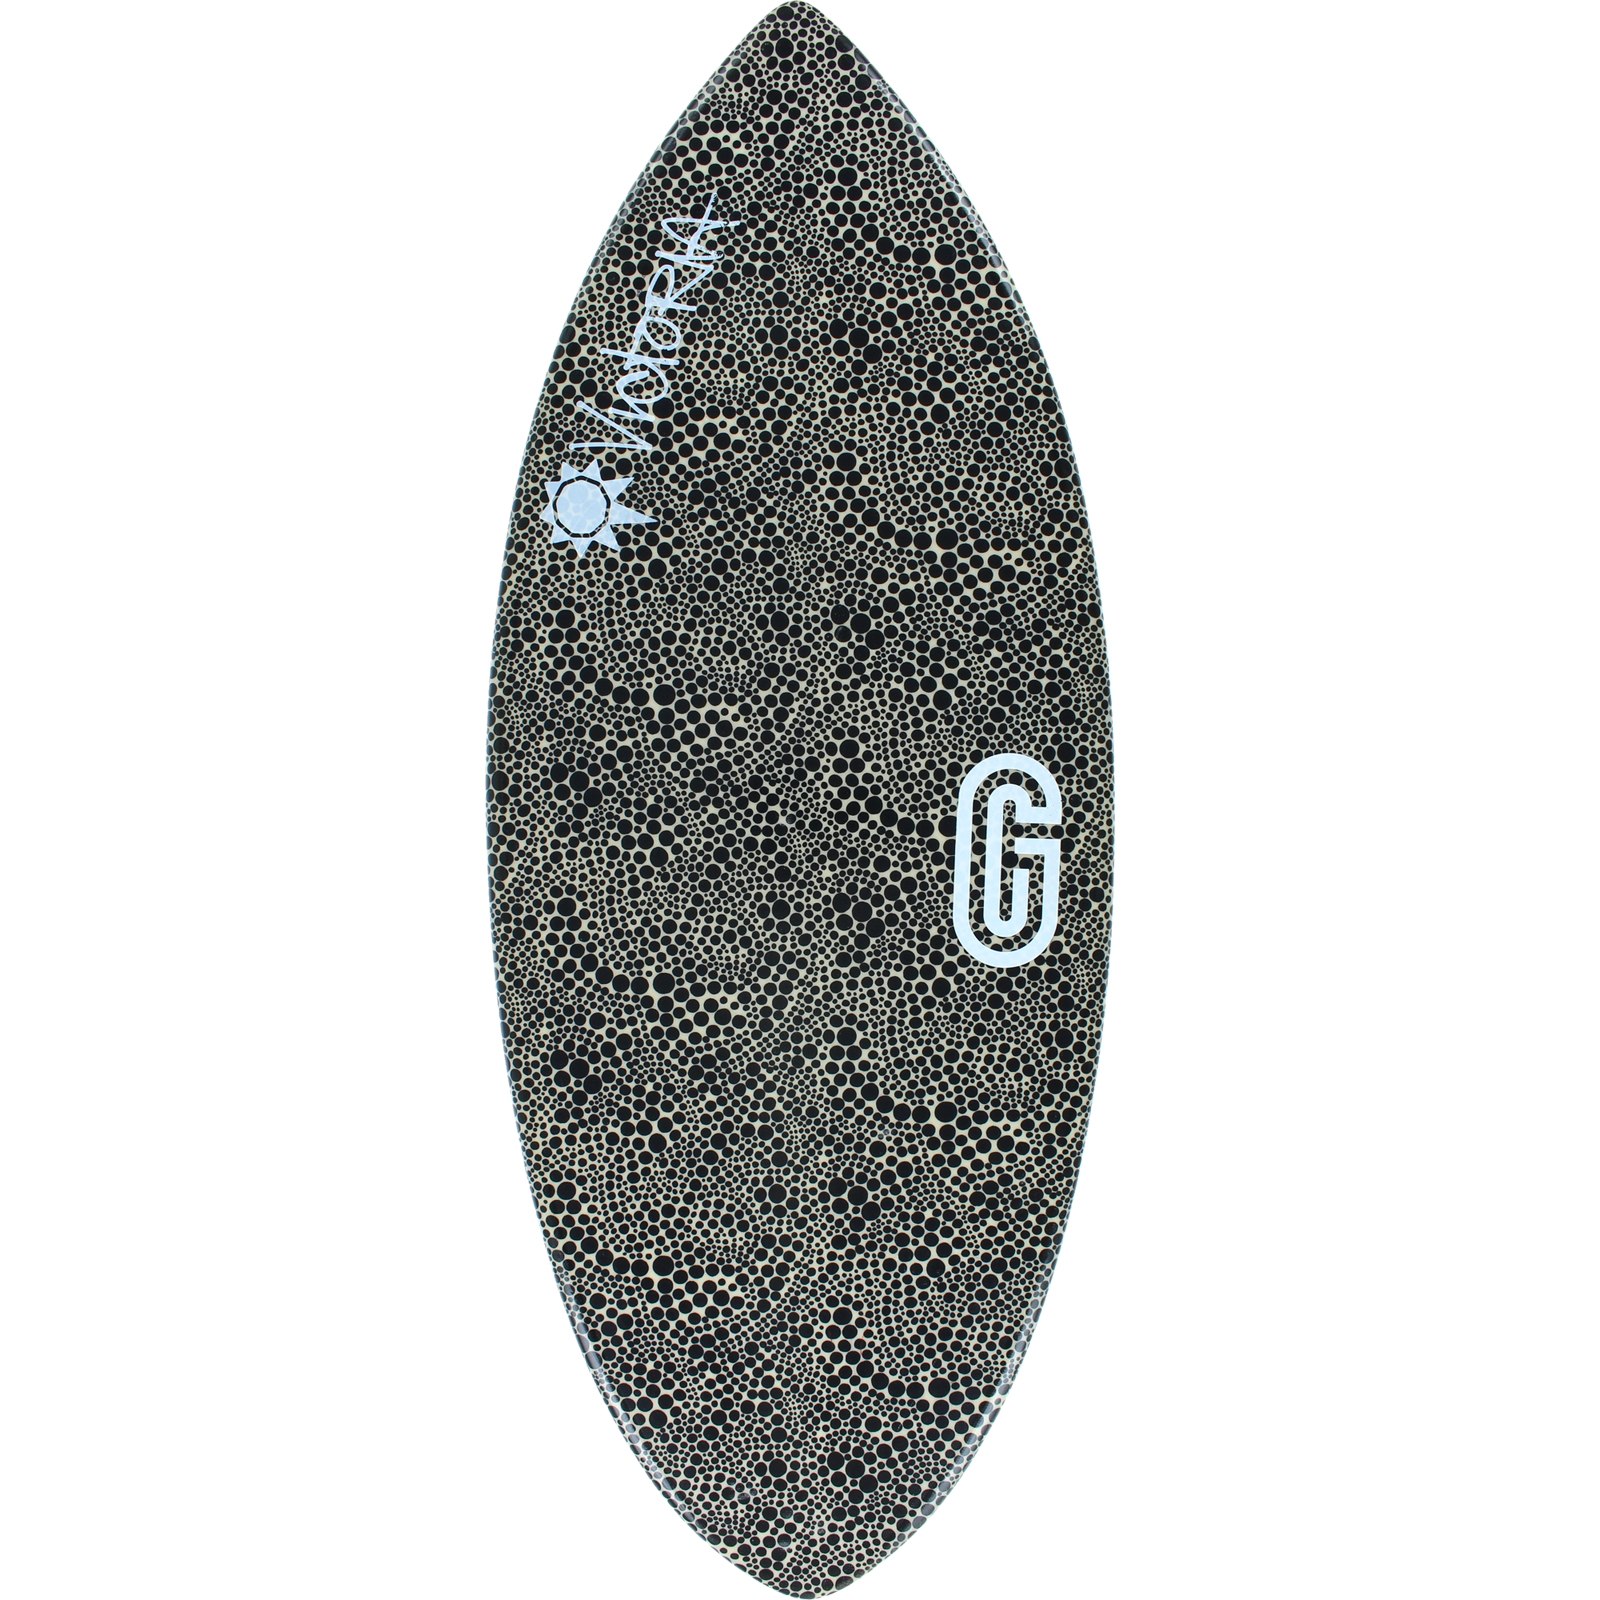 Victoria Grommet Skimboard - SMALL 46x18 - Raven  | Universo Extremo Boards Surf & Skate